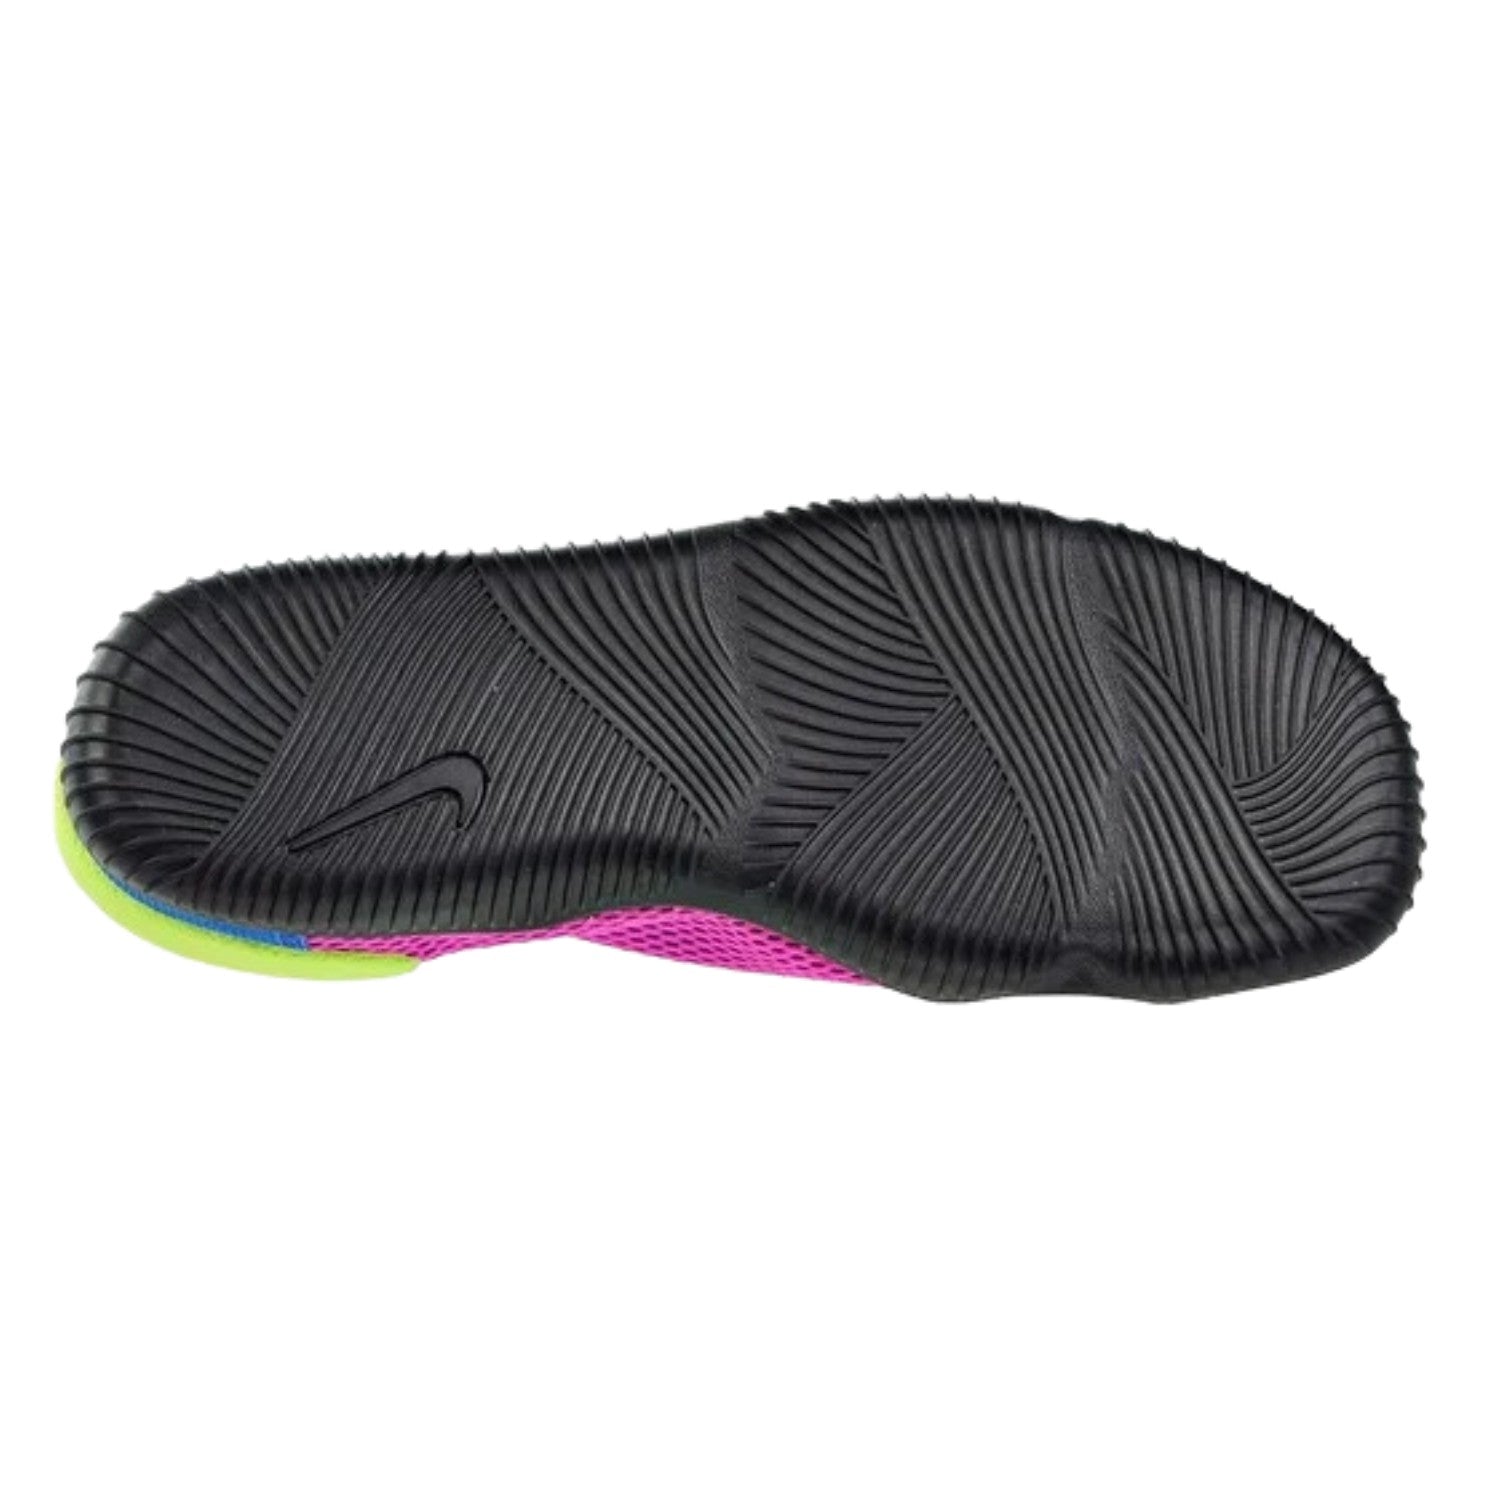 Nike Aqua Sock 360 (Gs/ps) Little Kids Style : 943760